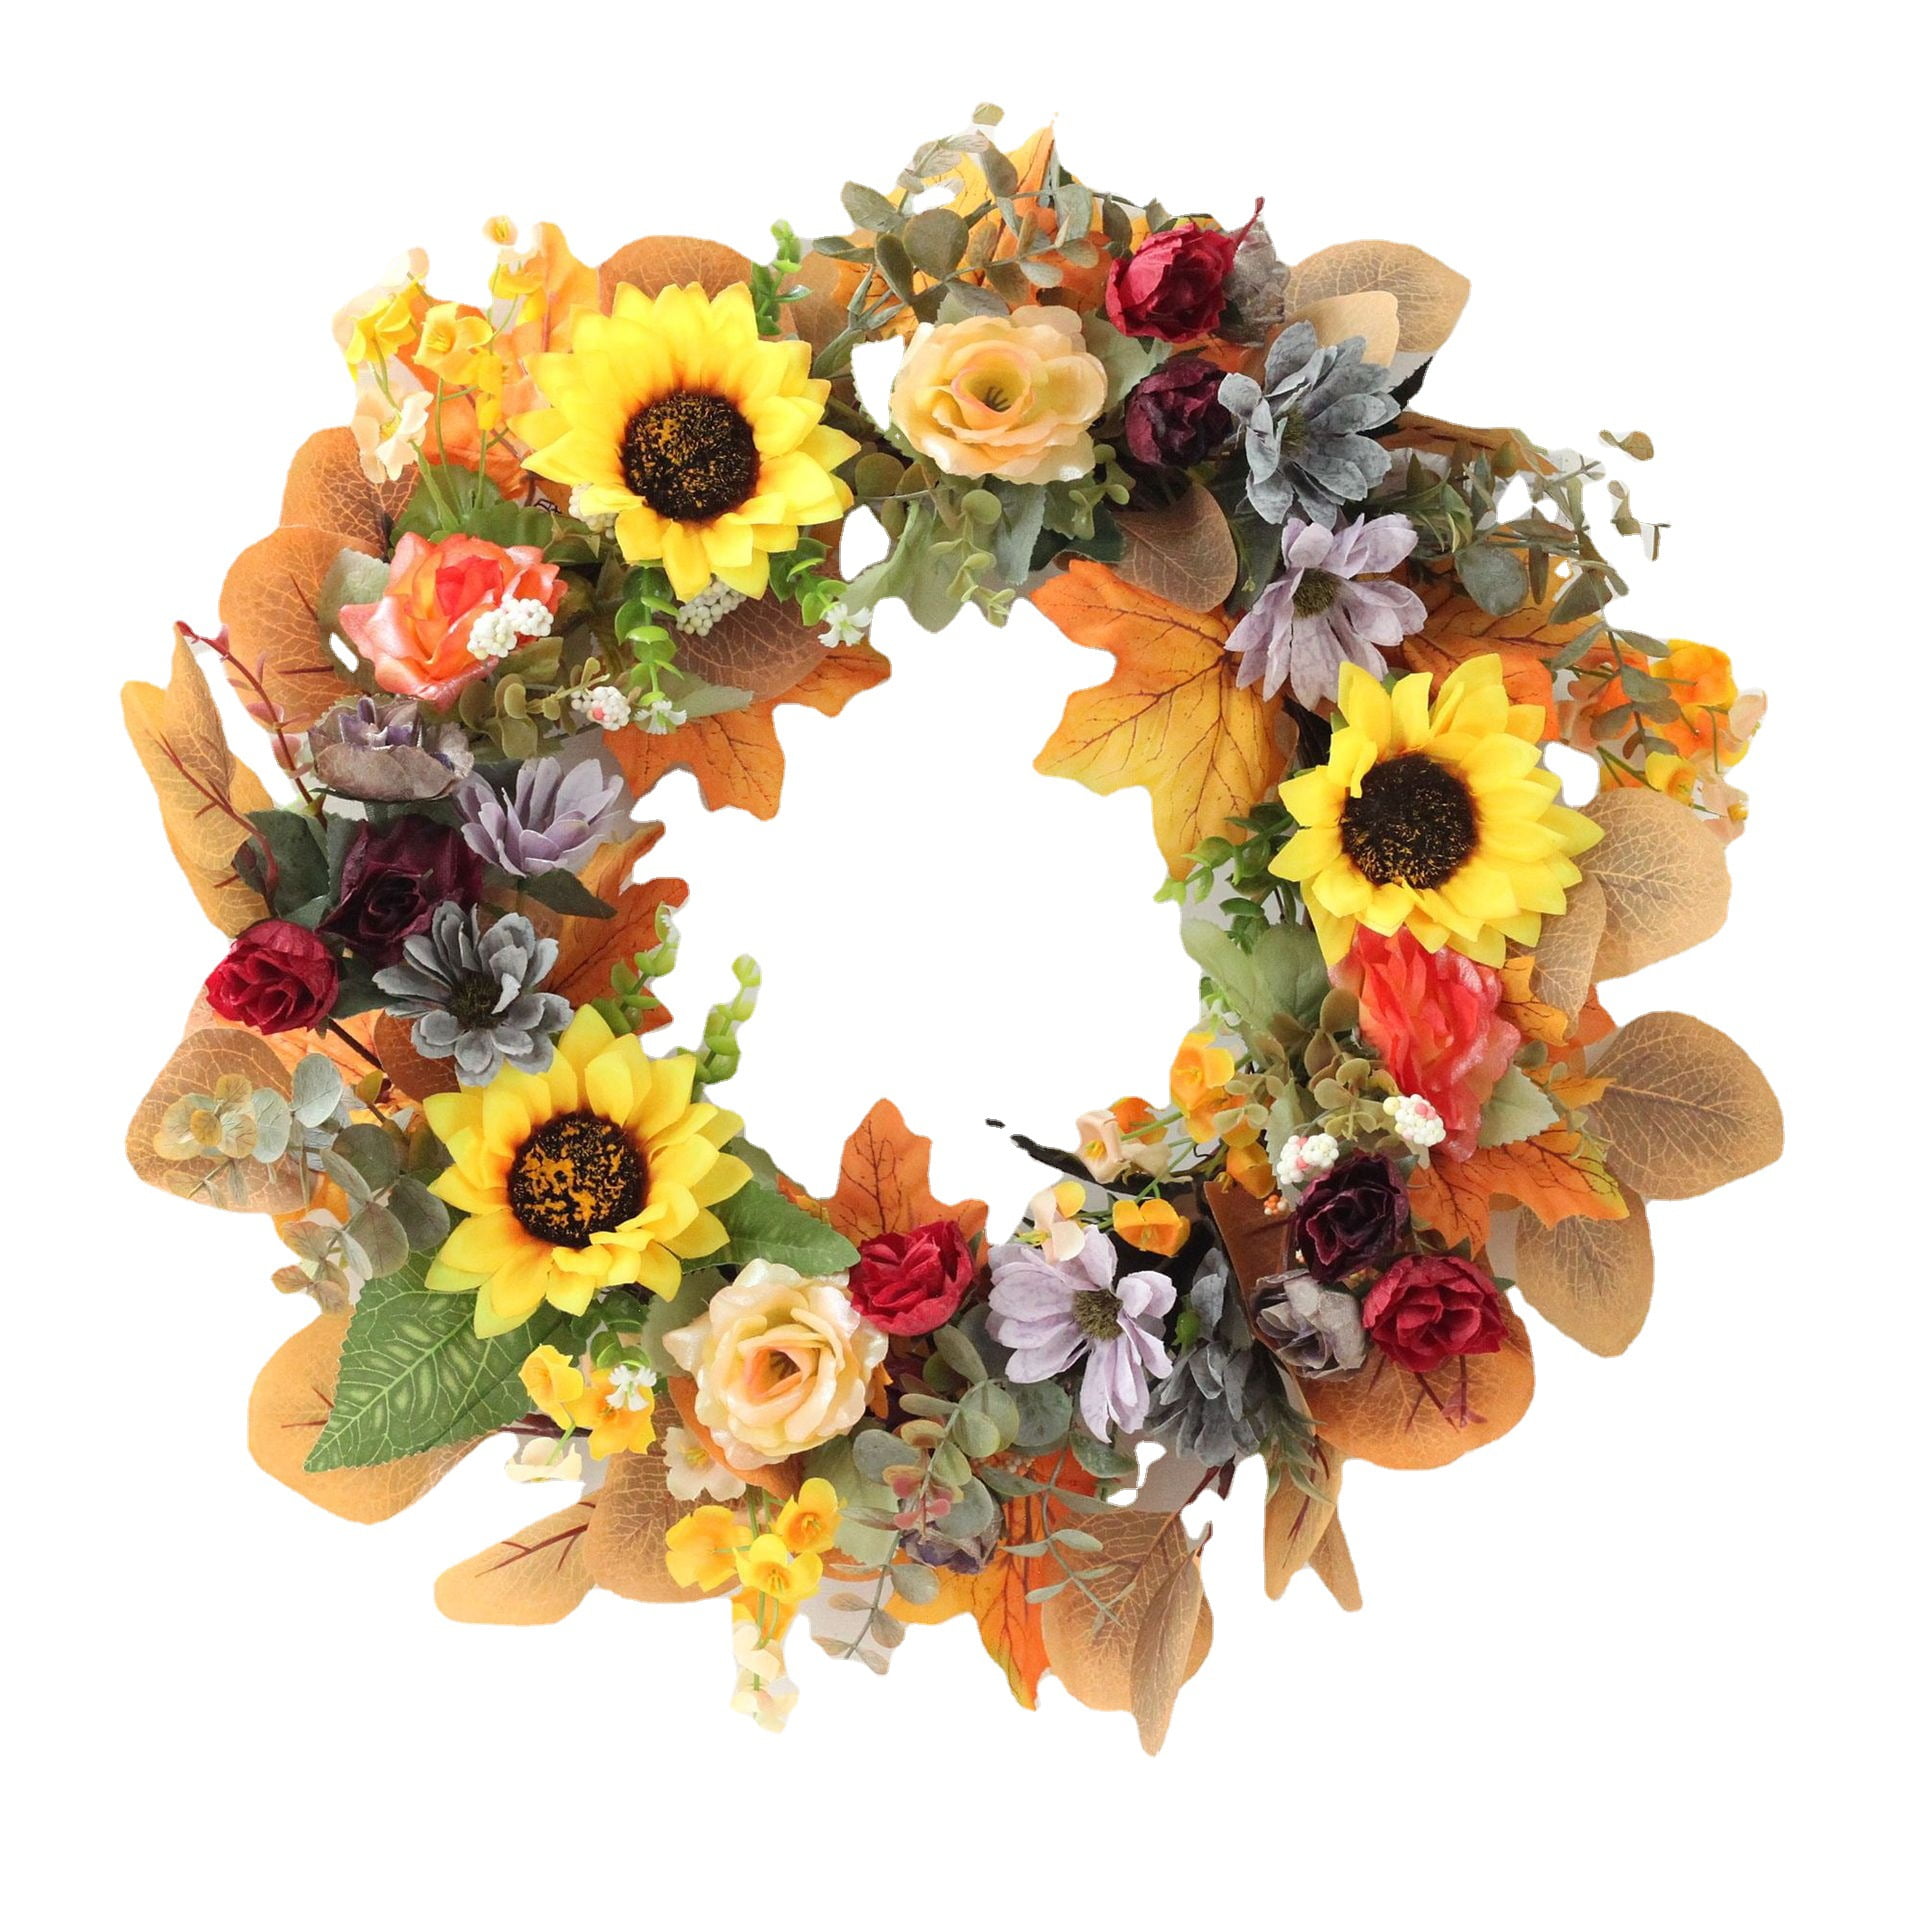 Sale Ends soon ! Fall Decor Stunning Burgundy -Toast Sunflowers Autumn Wreath Cream & Green Hydrangeas  Autumn Wreath for Front door